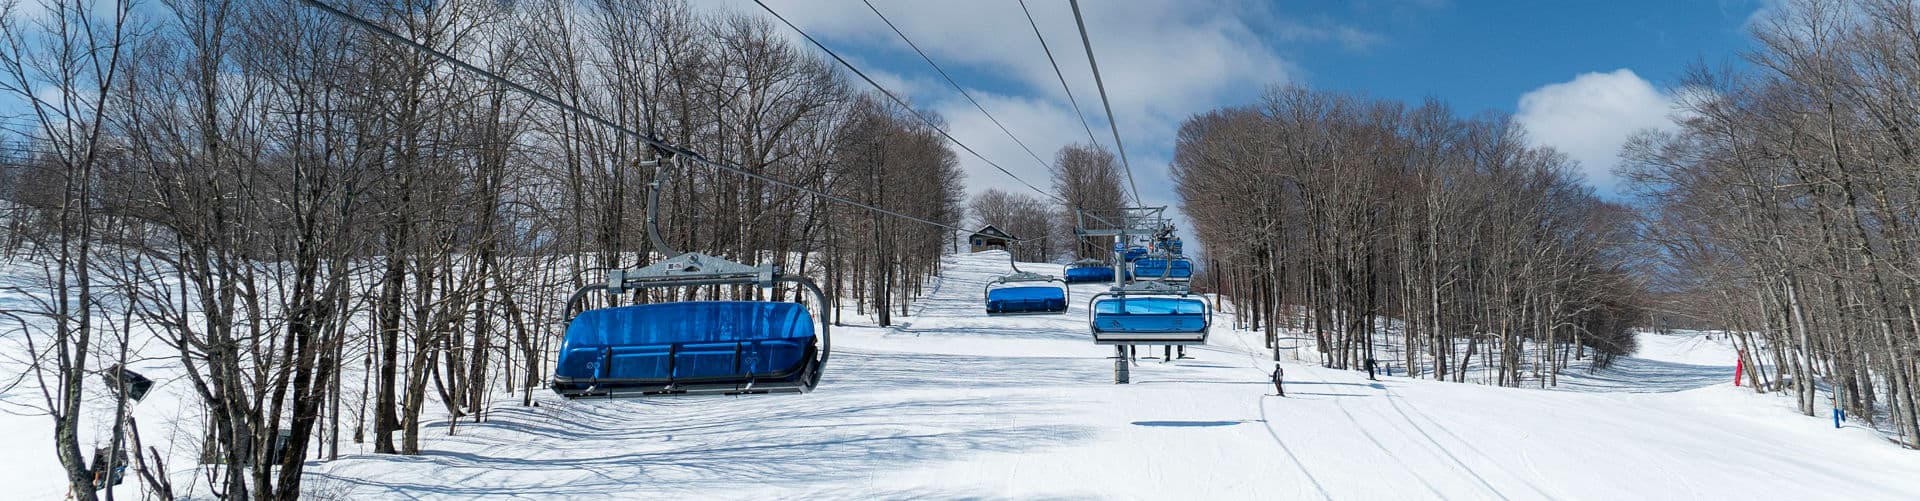 Mount Snow Resort - Winter Chairlift